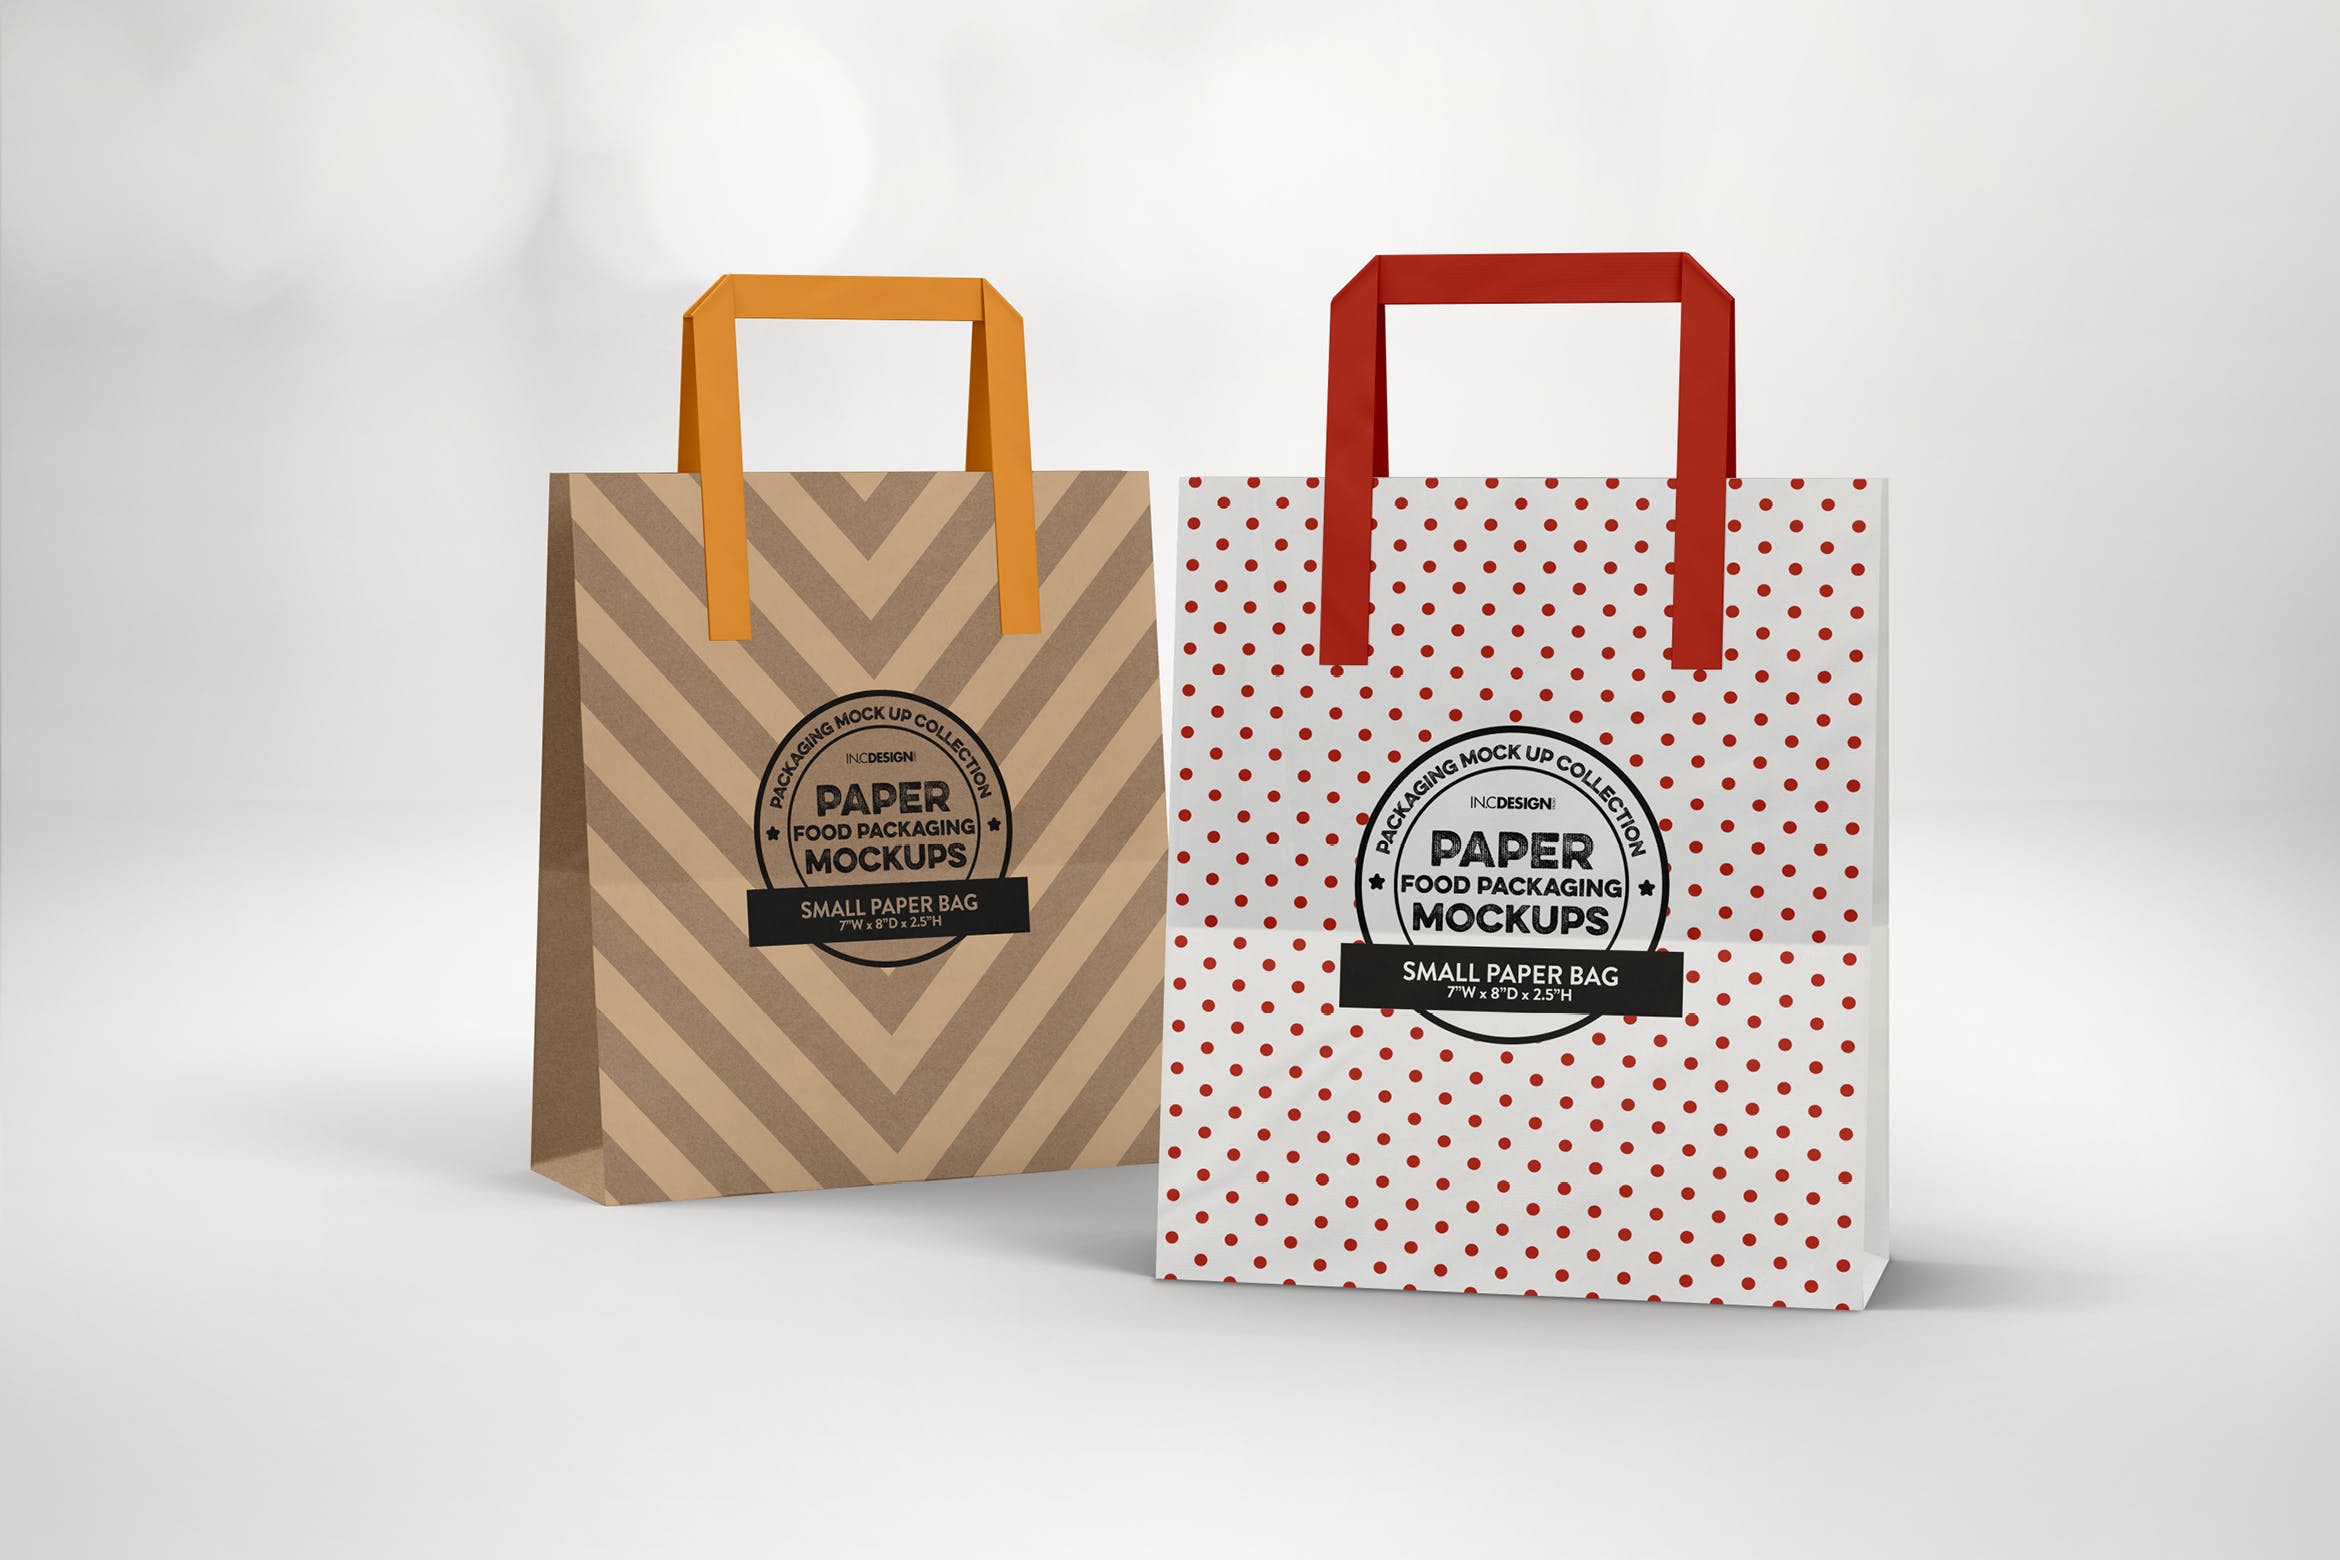 购物纸袋外观设计效果预览蚂蚁素材精选 Small Bags with Flat Handles Packaging Mockup插图